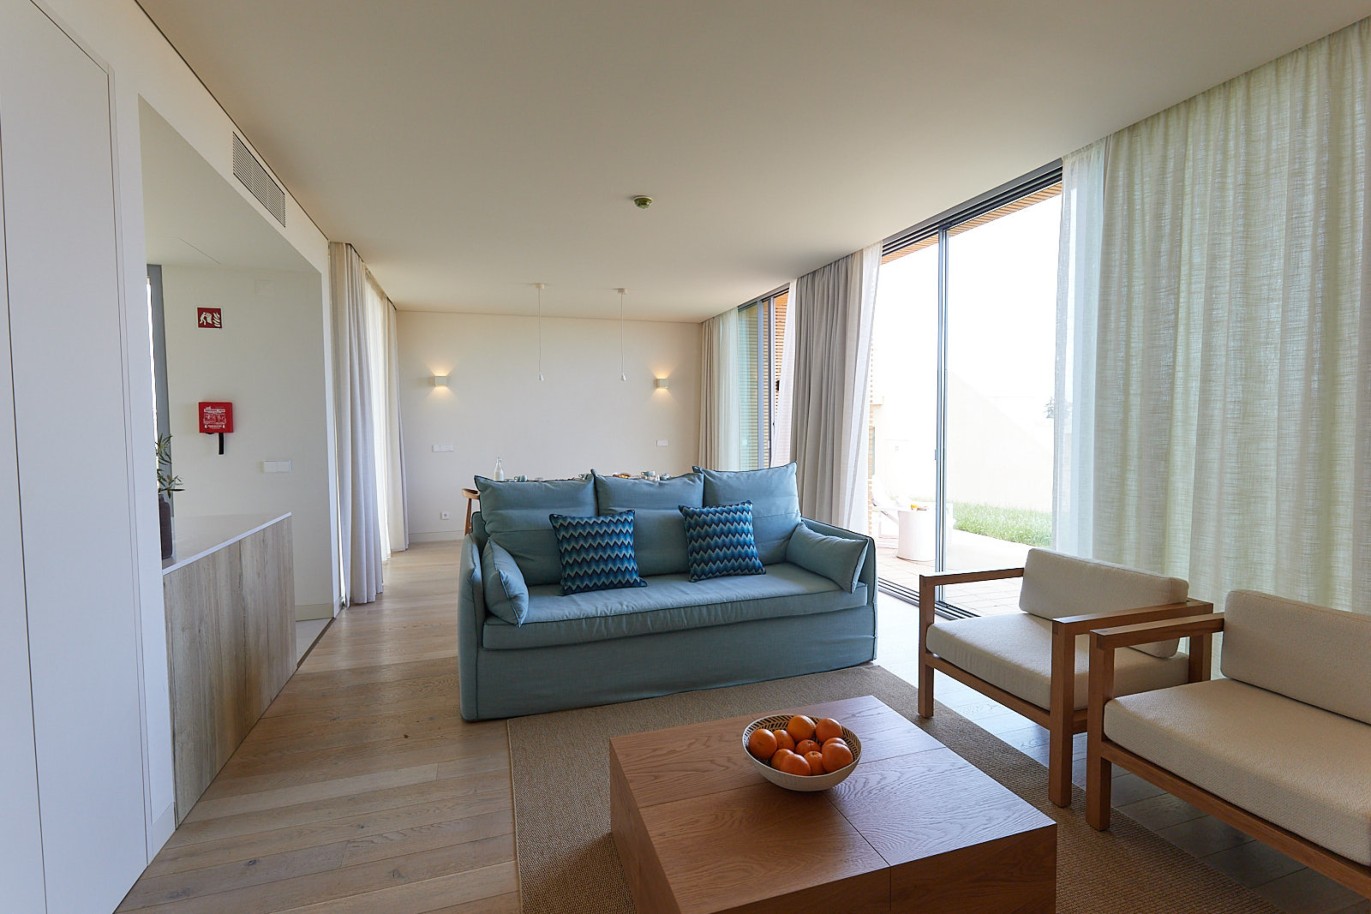 2 bedroom apartment in resort, for sale in Porches, Algarve_230646